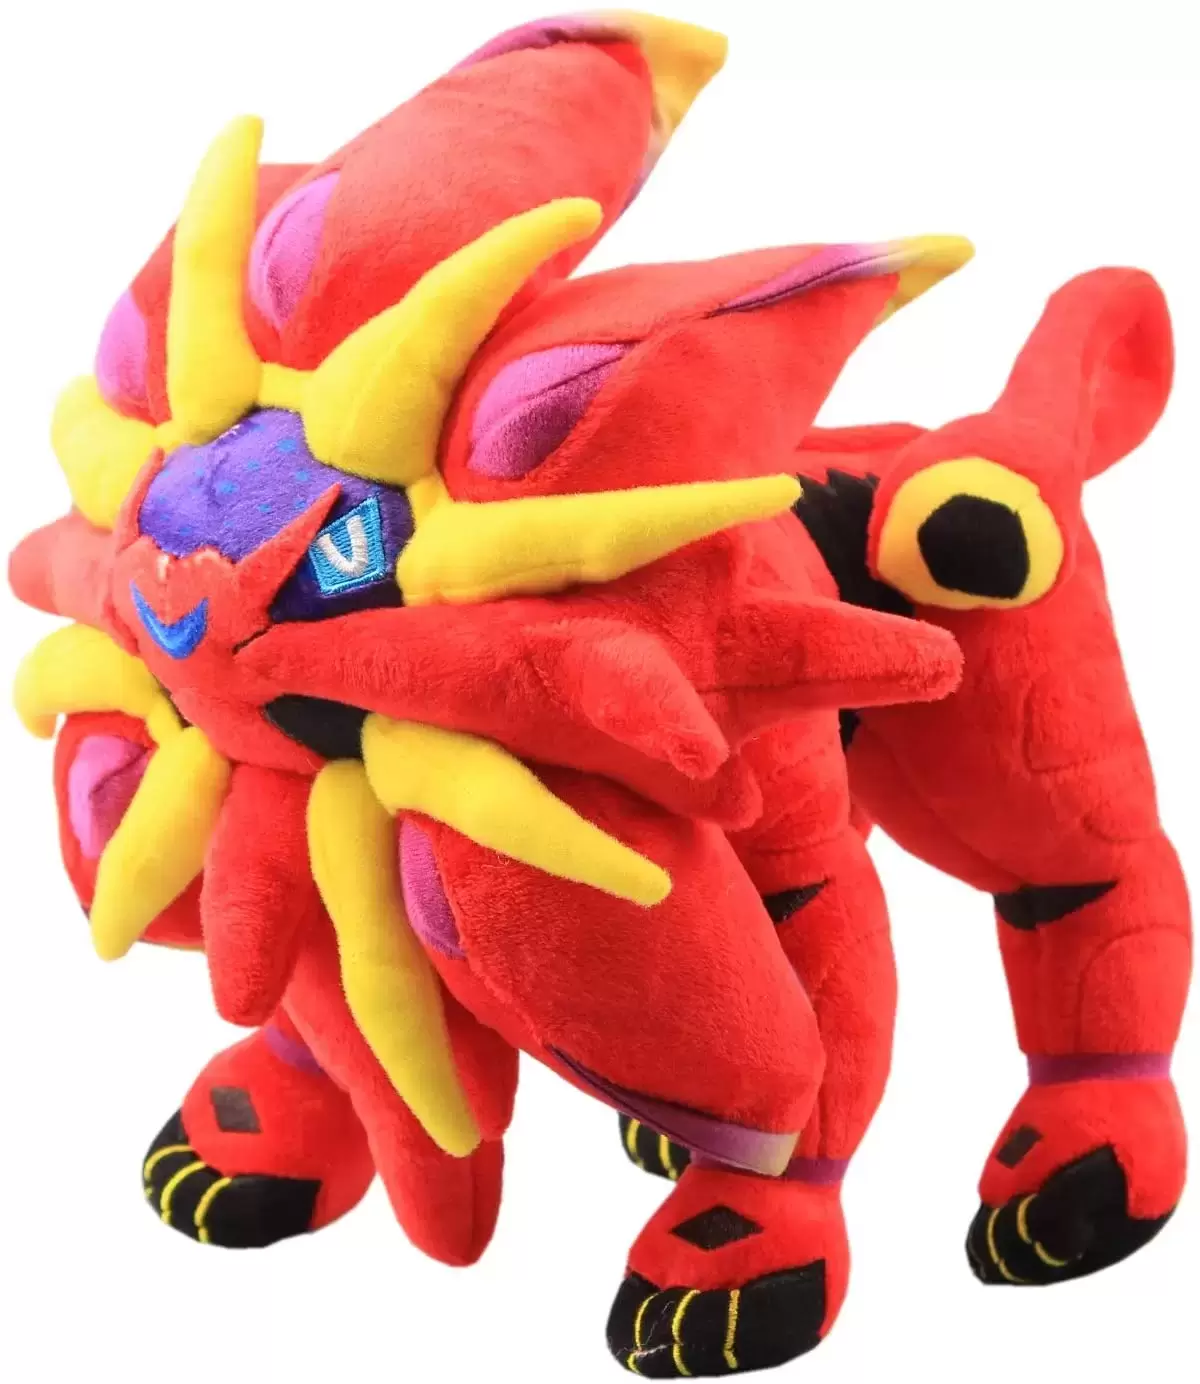 Plush Mimikyu Shiny Pokémon